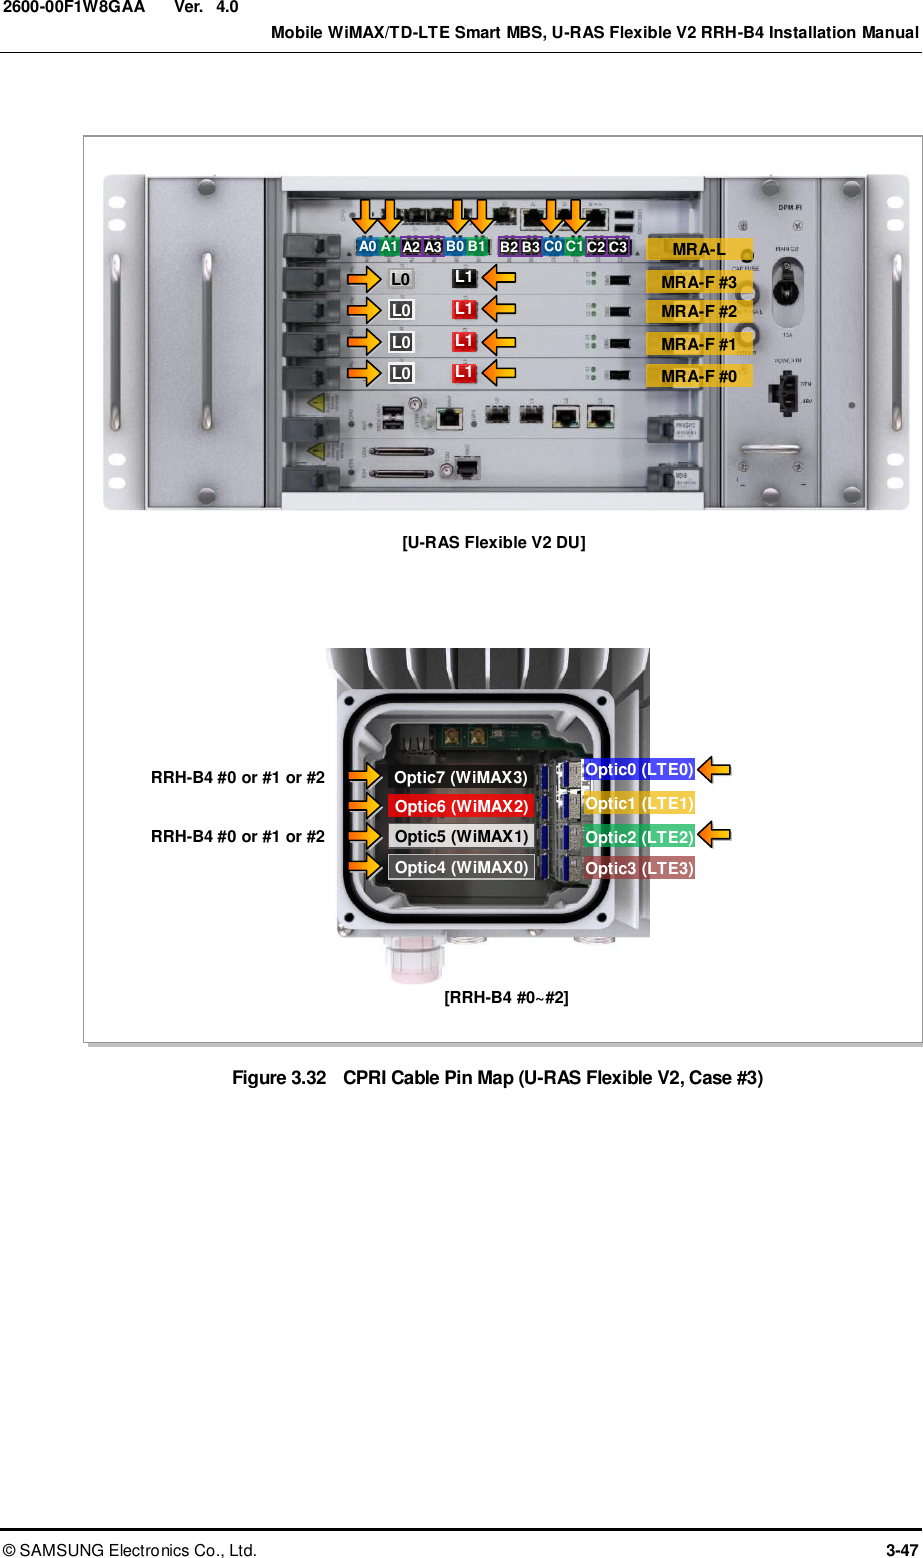  Ver.    Mobile WiMAX/TD-LTE Smart MBS, U-RAS Flexible V2 RRH-B4 Installation Manual ©  SAMSUNG Electronics Co., Ltd.  3-47 2600-00F1W8GAA 4.0  Figure 3.32  CPRI Cable Pin Map (U-RAS Flexible V2, Case #3)  [U-RAS Flexible V2 DU] Optic0 (LTE0) Optic1 (LTE1) Optic2 (LTE2) Optic3 (LTE3) [RRH-B4 #0~#2] RRH-B4 #0 or #1 or #2 MRA-L MRA-F #3 MRA-F #2 MRA-F #1 MRA-F #0 Optic4 (WiMAX0) Optic6 (WiMAX2) Optic5 (WiMAX1) Optic7 (WiMAX3) L0 L0 L1 L0 L1 L0 L1 L1 A0 A1 A2 A3 B0 B1 B2 B3 C0 C1 C2 C3 RRH-B4 #0 or #1 or #2 